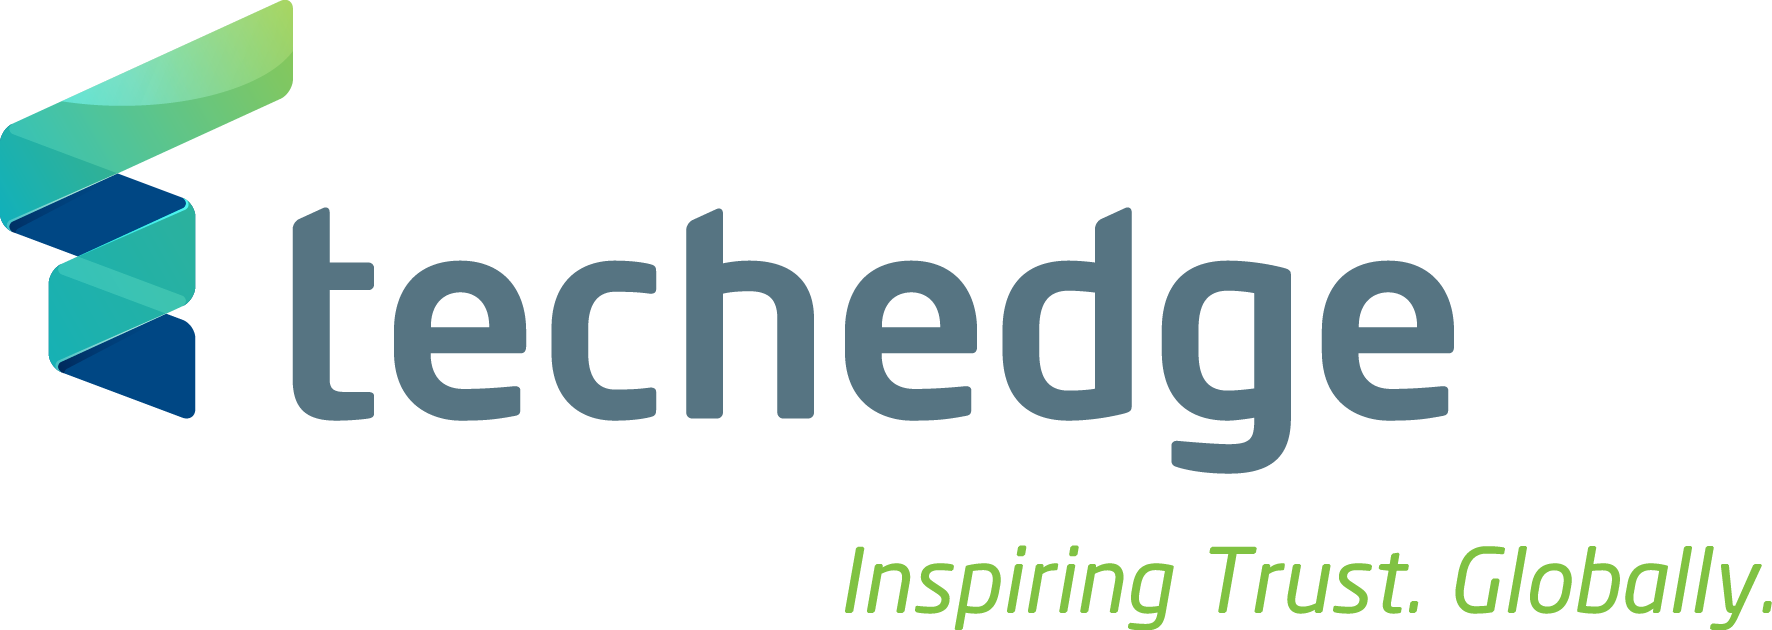 Techedge-Logo